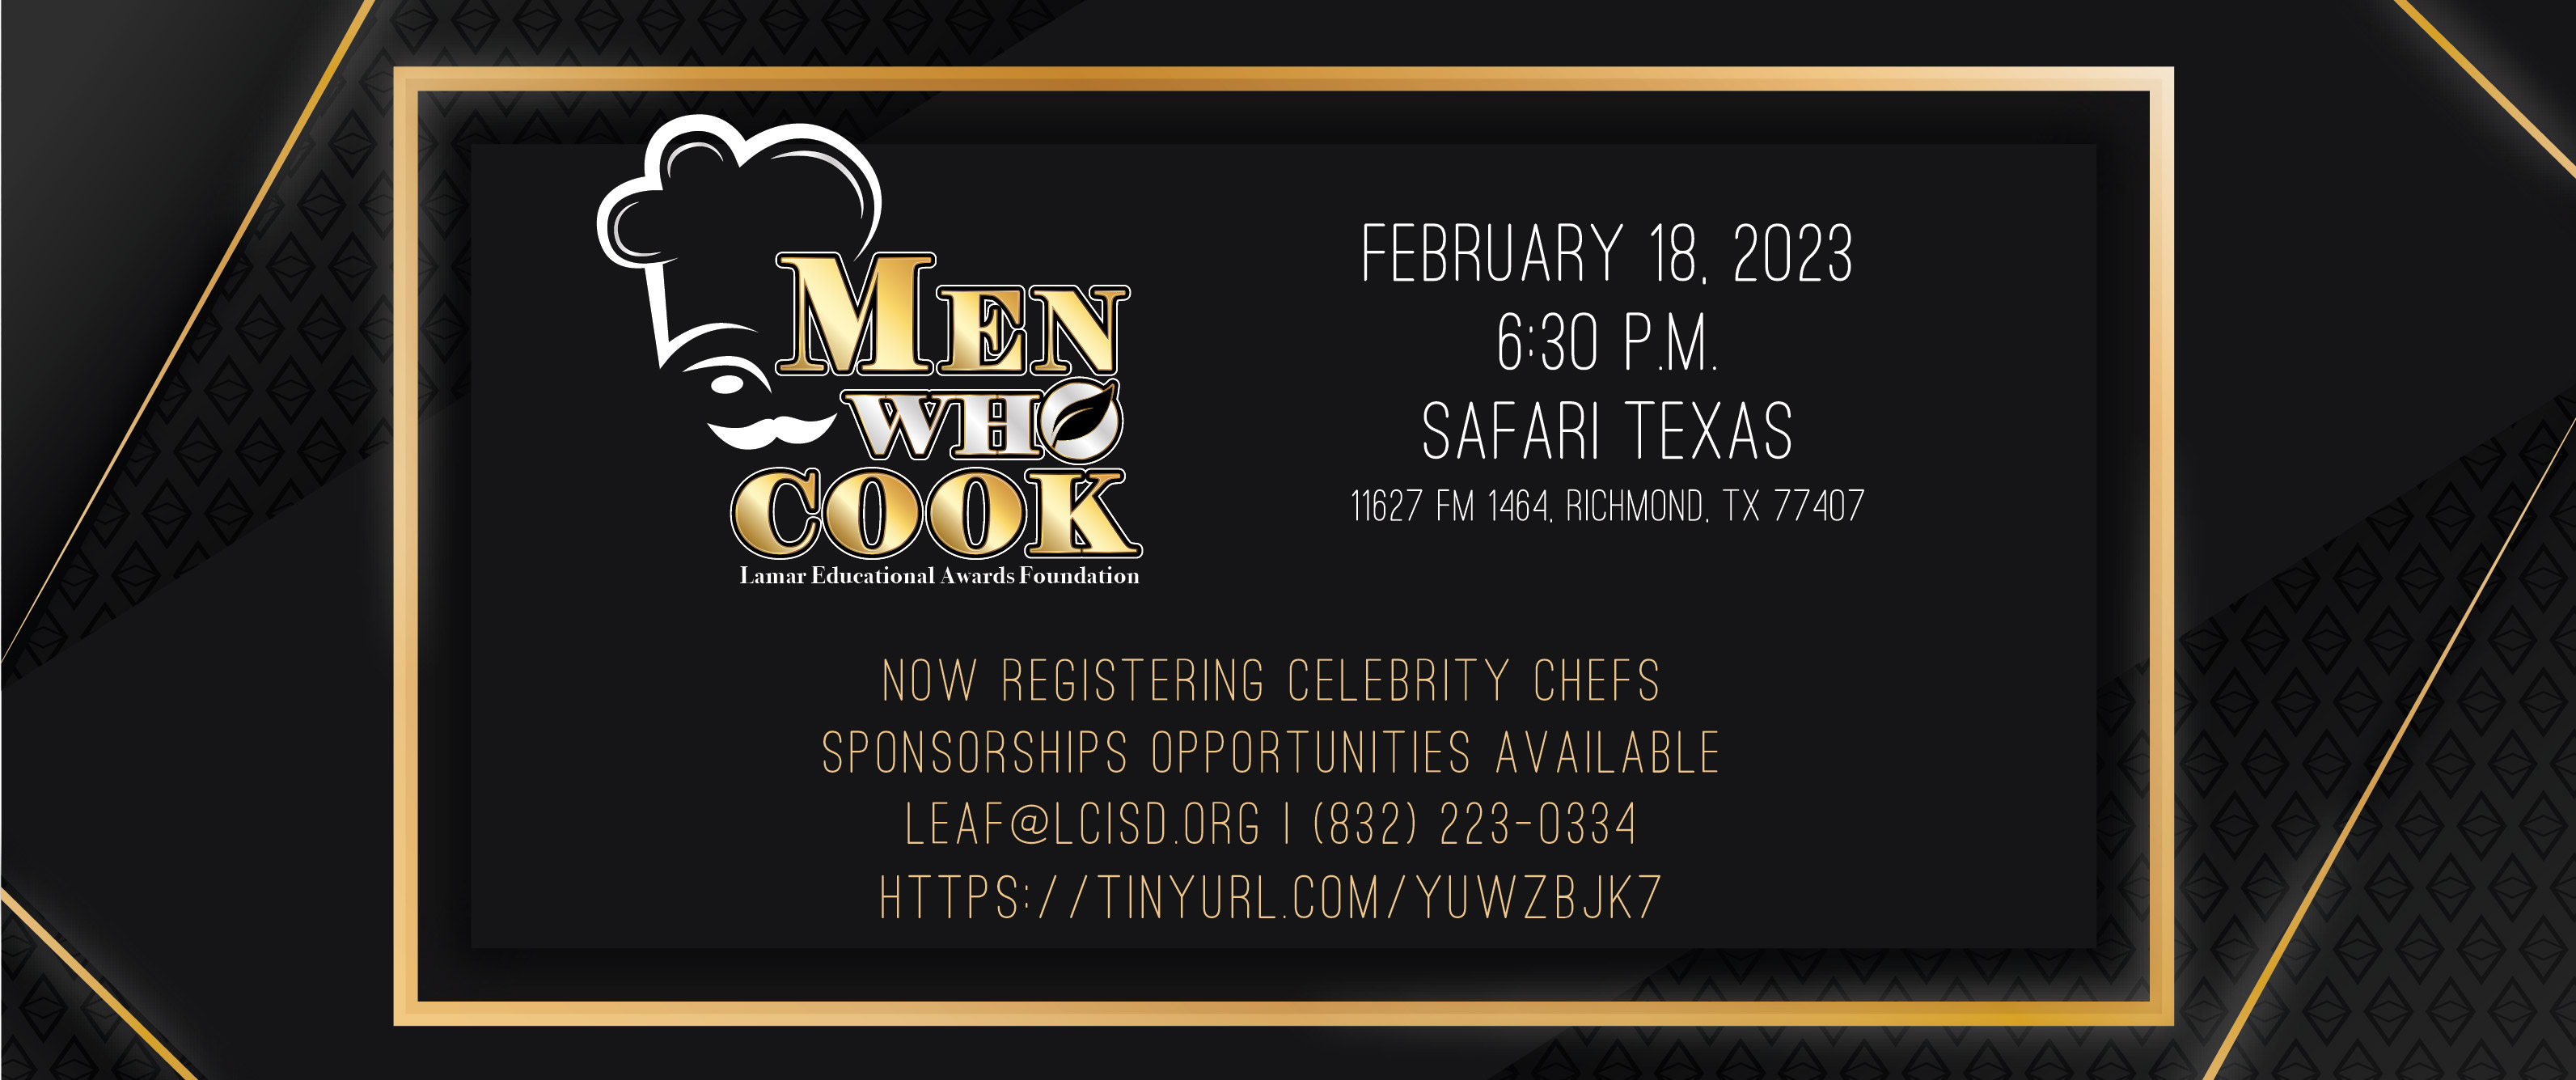 REV invitation Men Cook